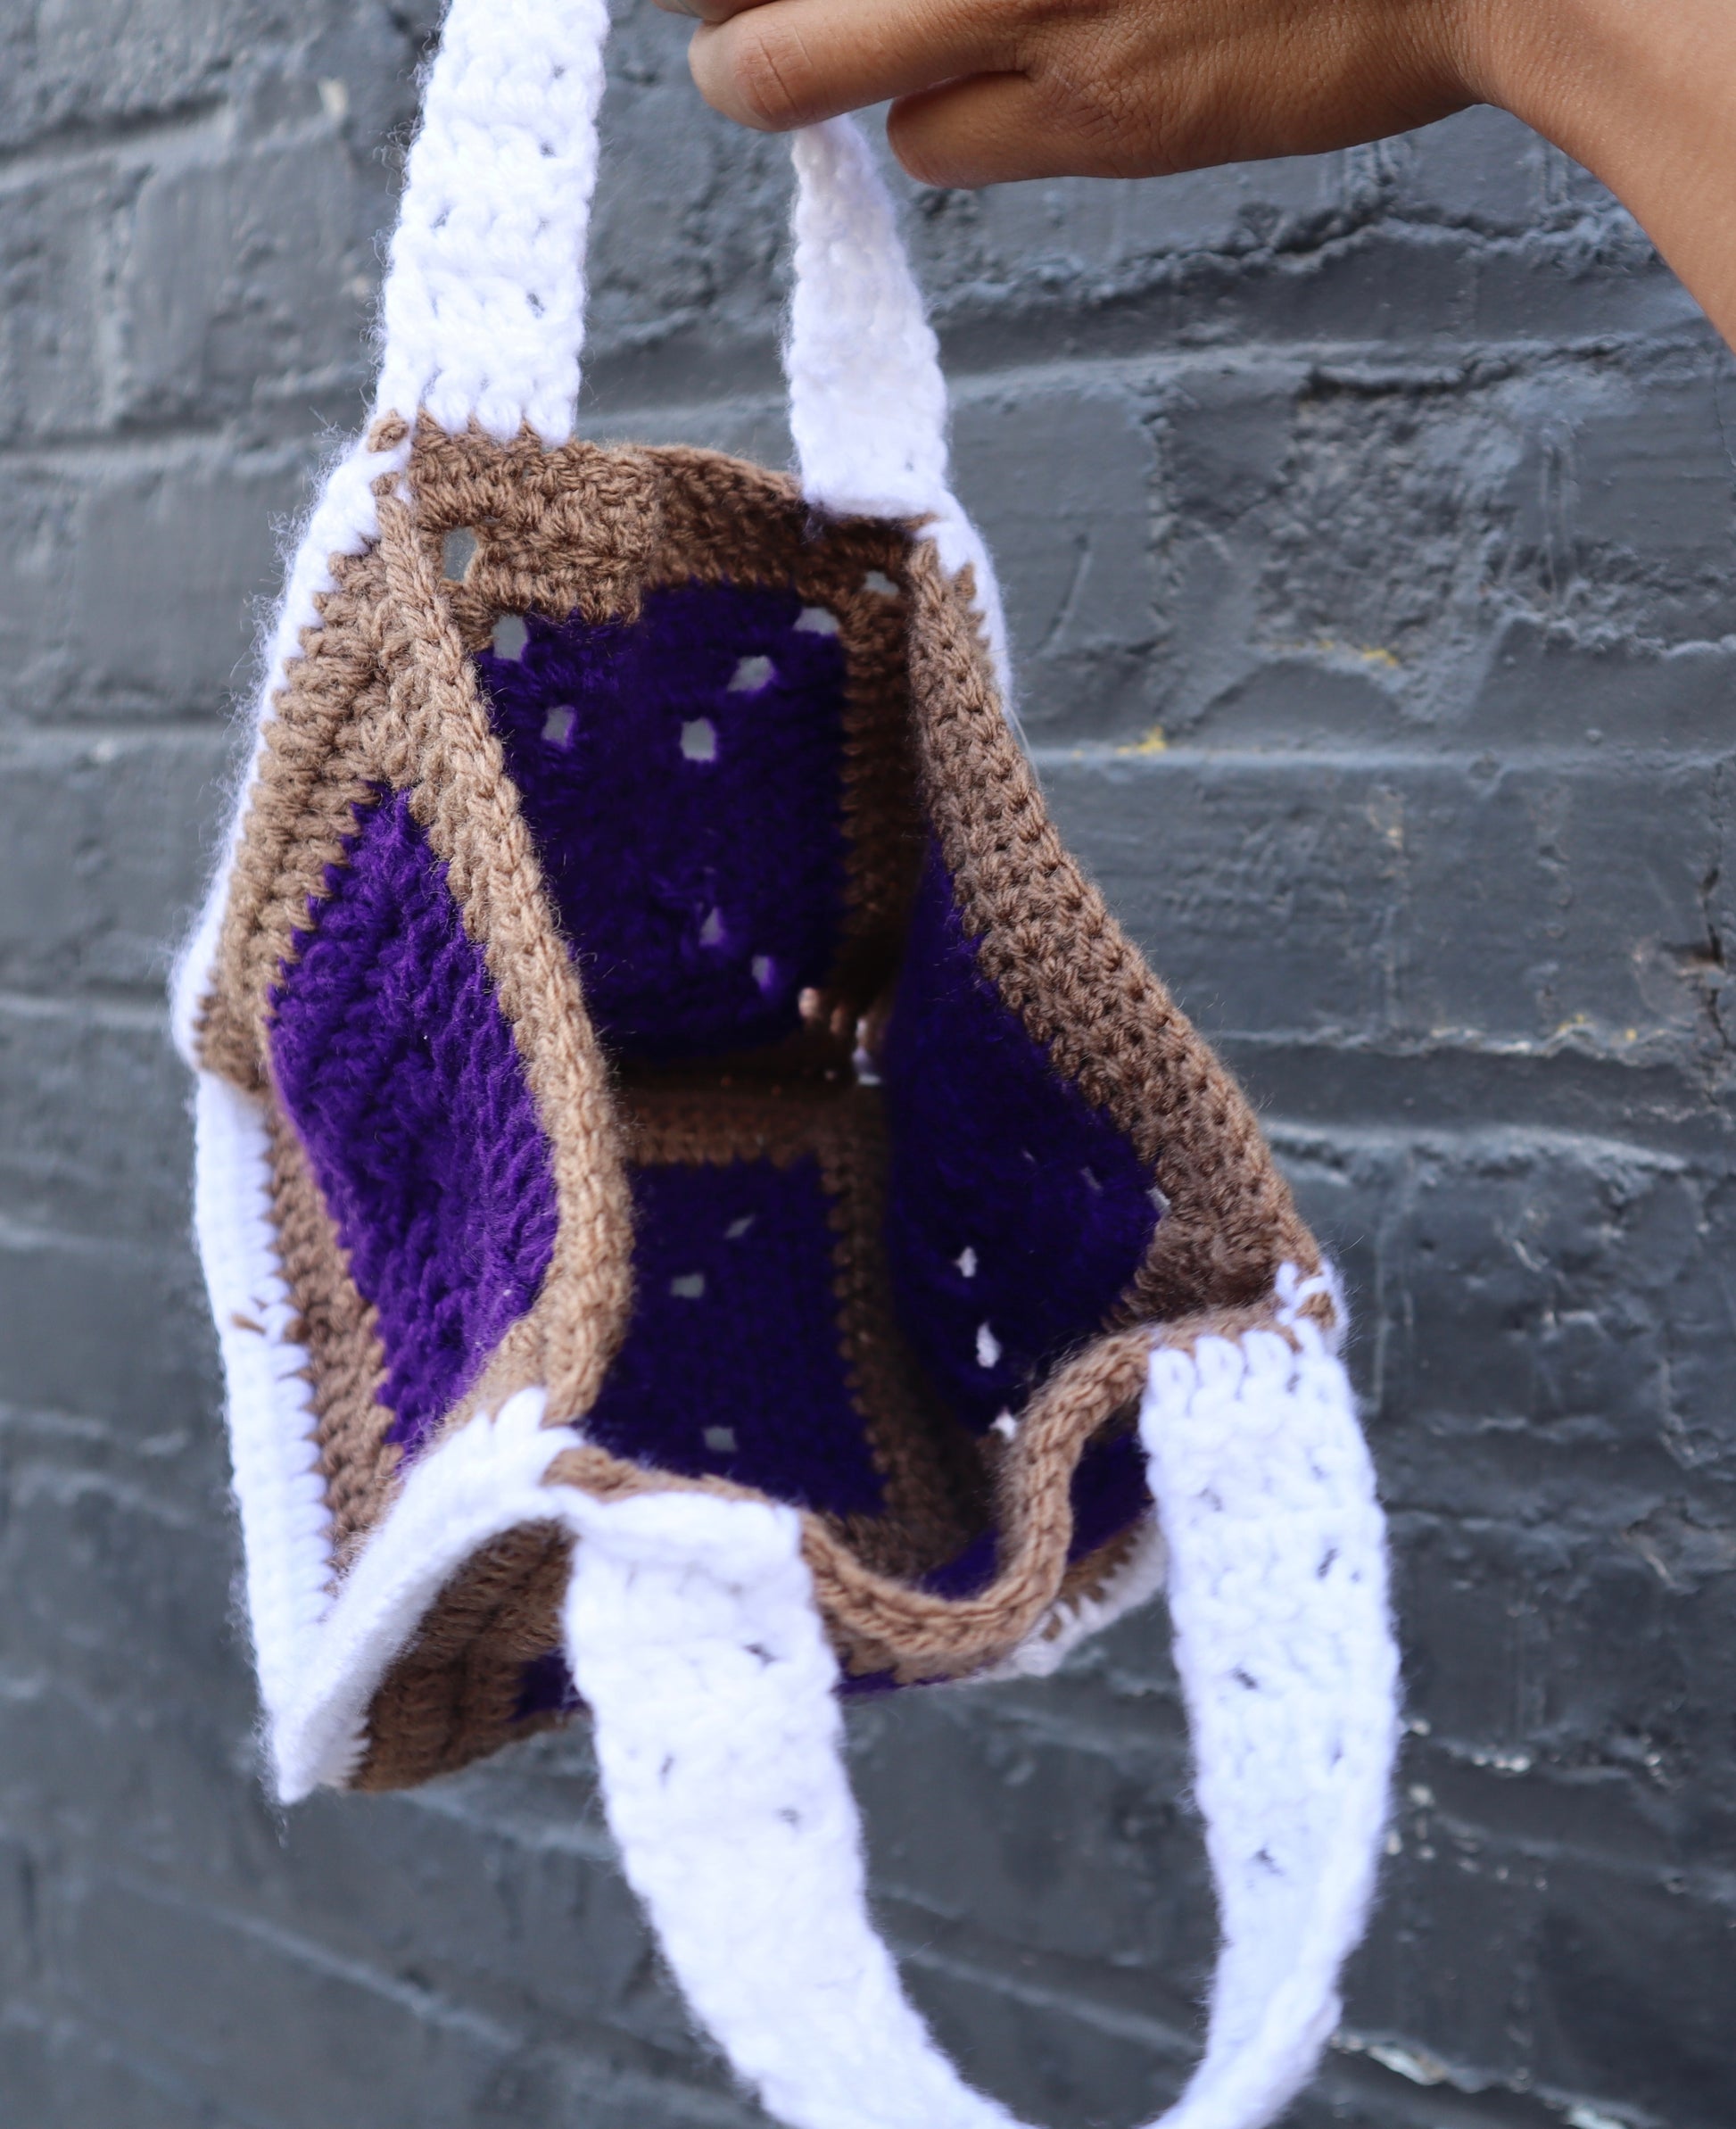 ShopDigitalGirl, Crochet Bags